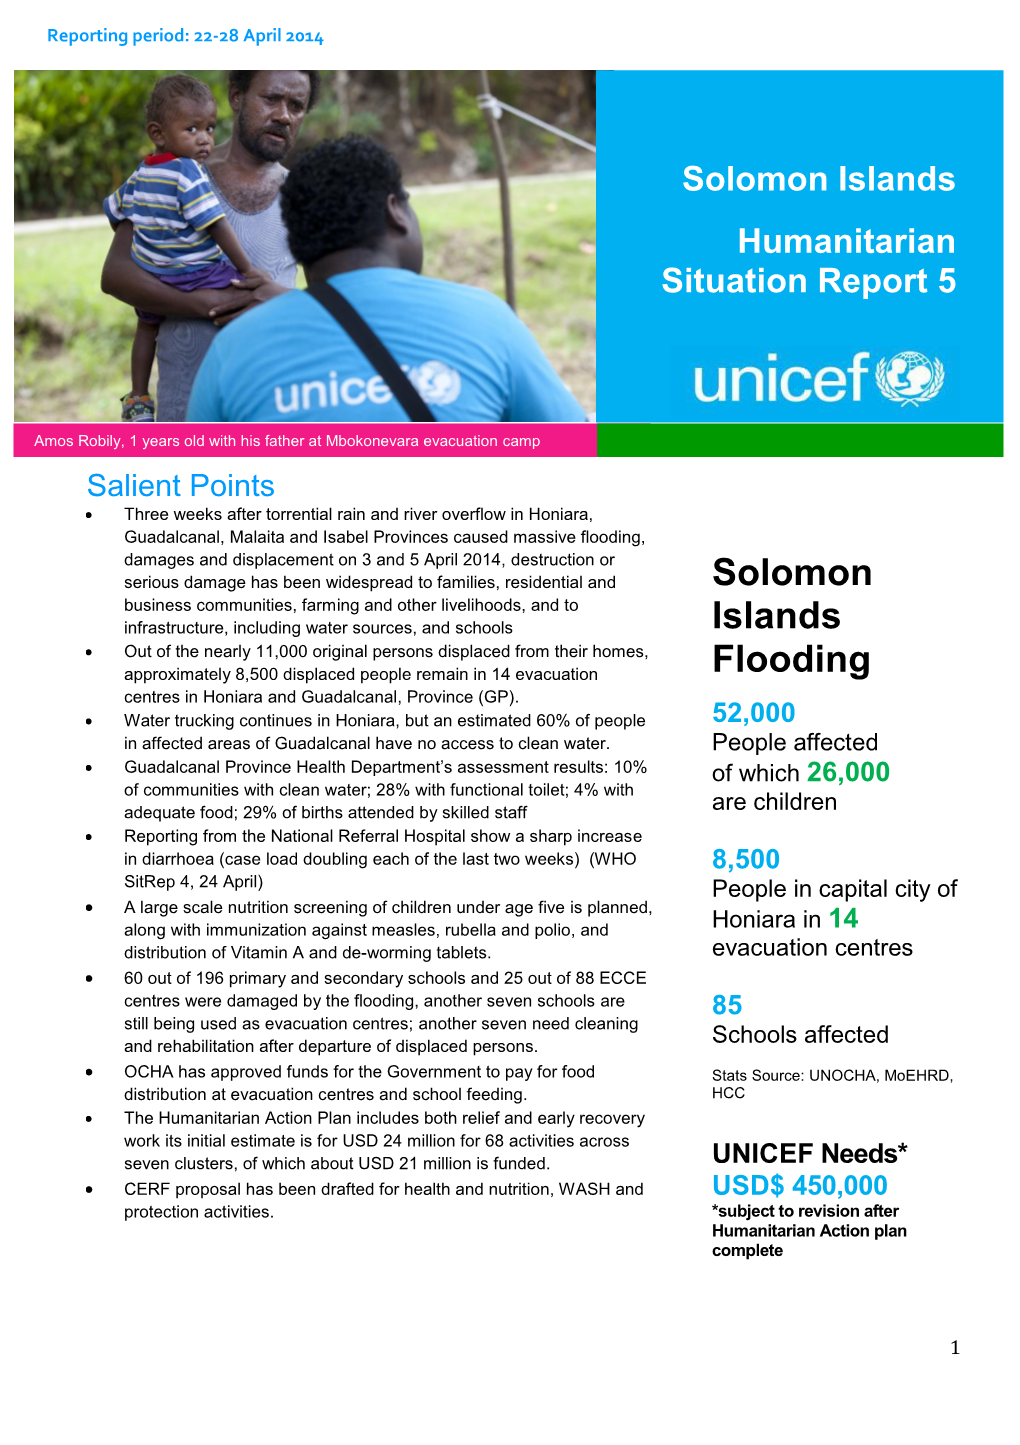 Solomon Islands Flooding